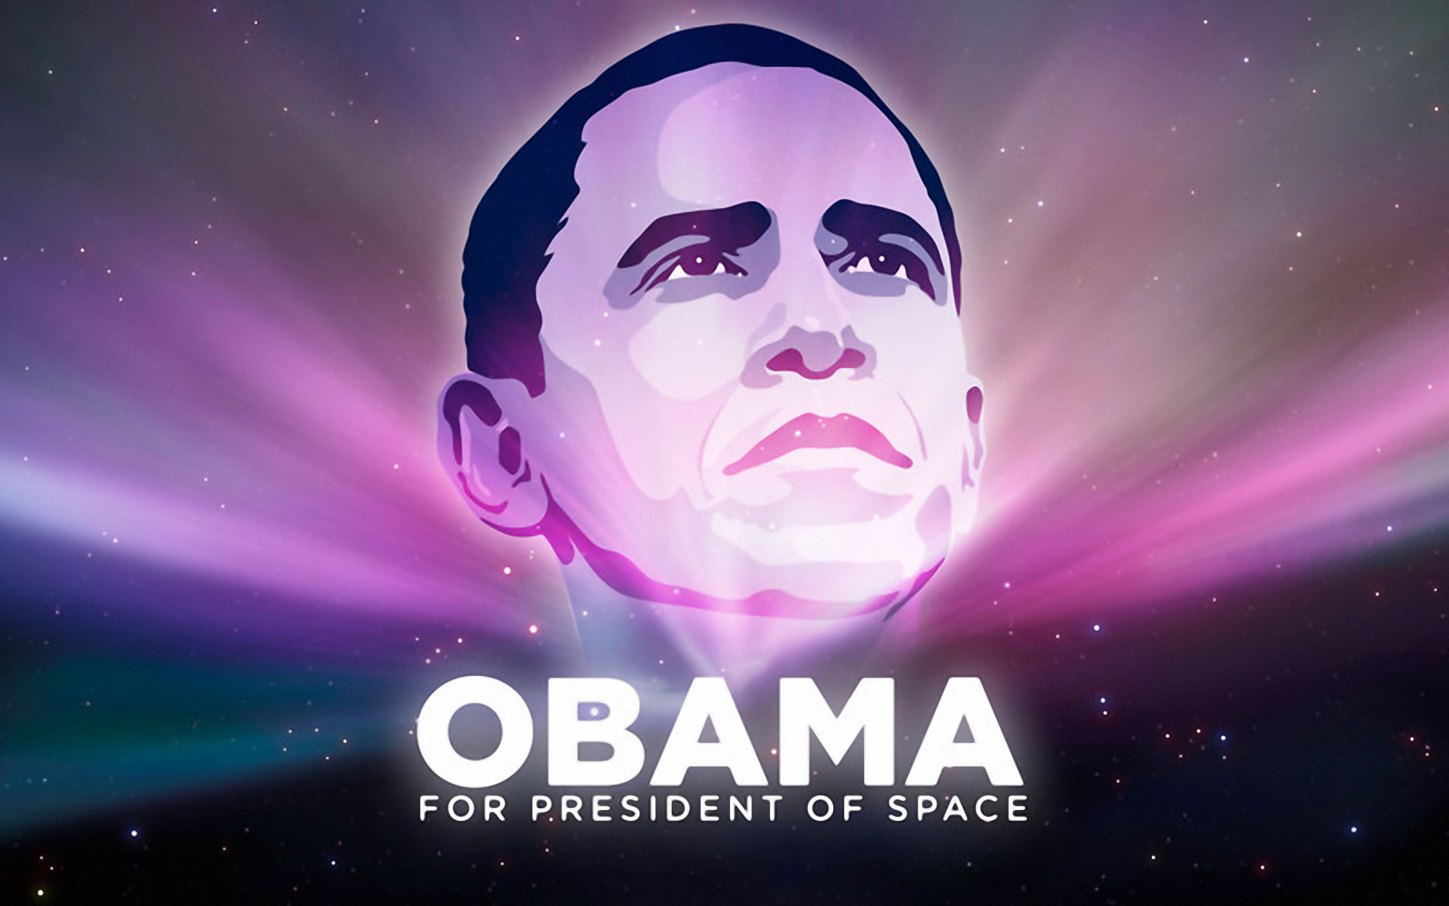 Download It For Your Desktop - Obama Wallpaper Funny , HD Wallpaper & Backgrounds